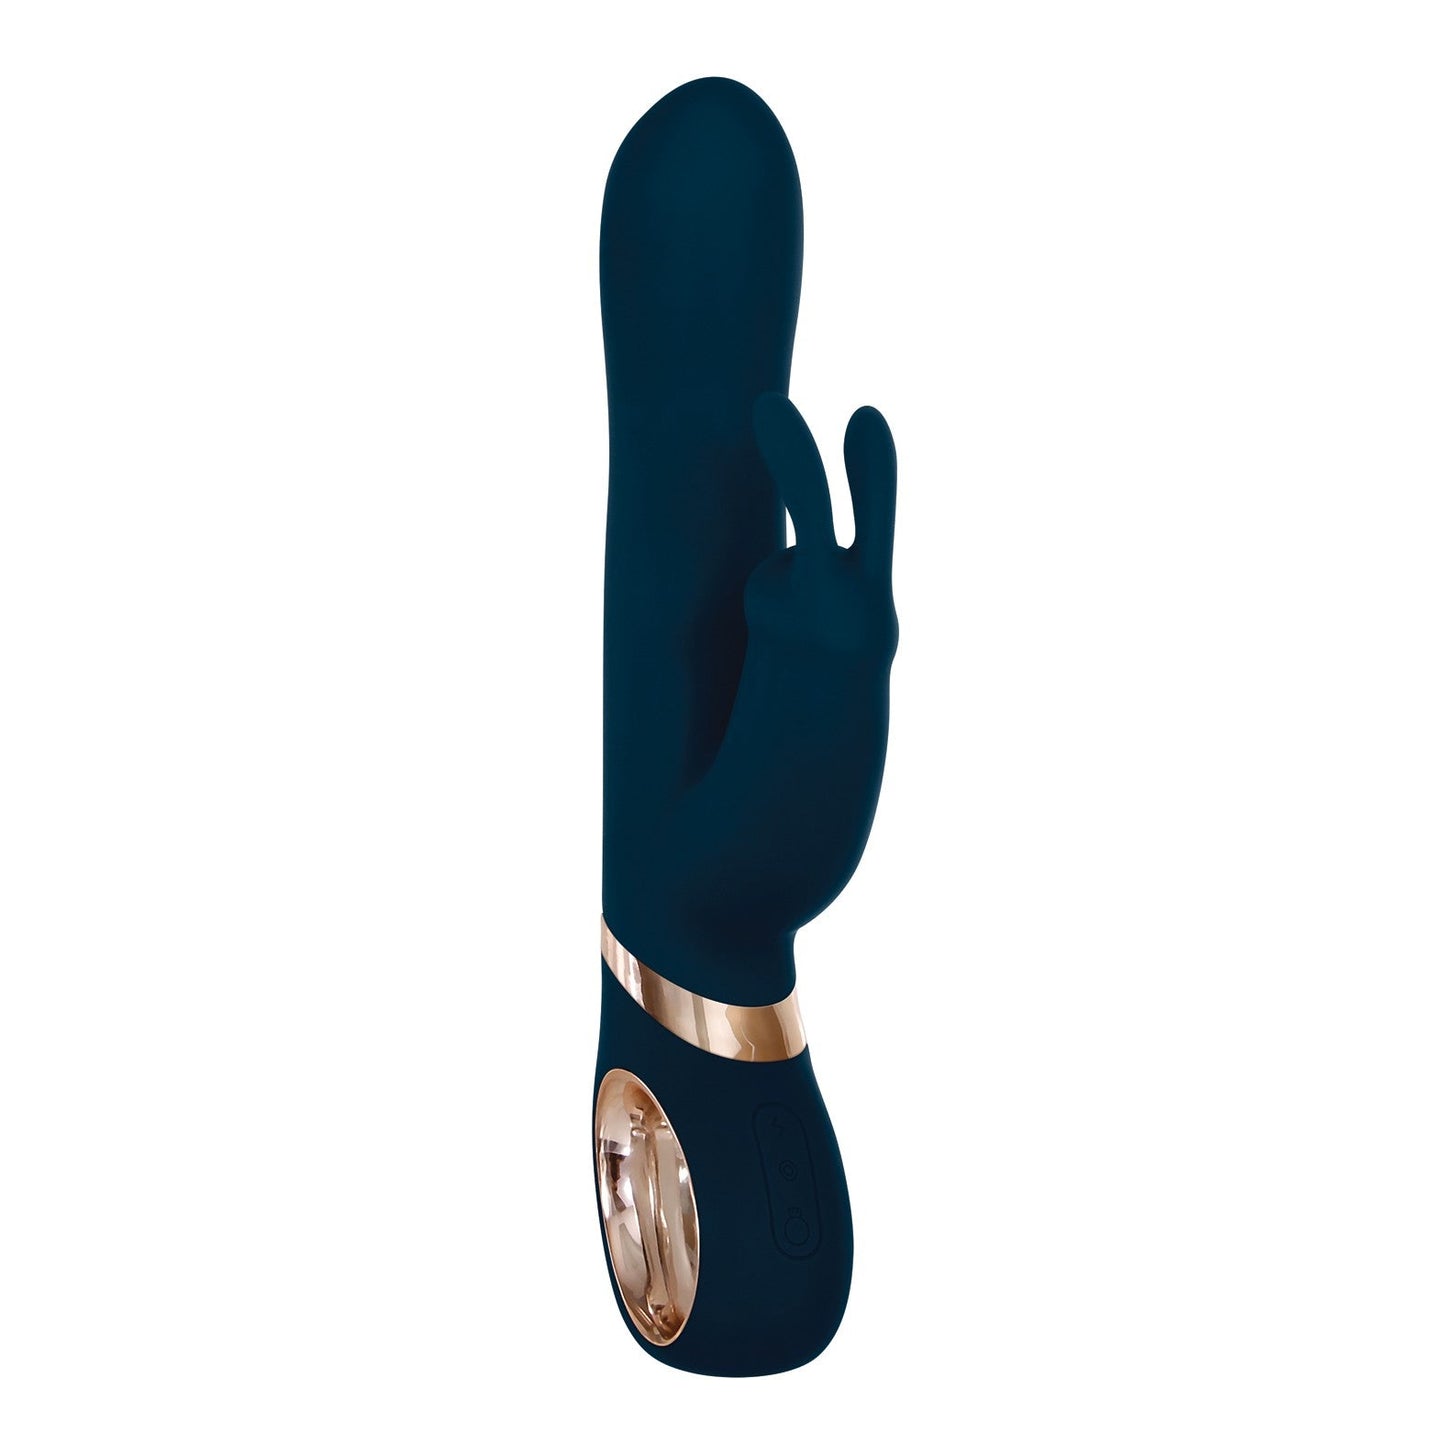 Adam & Eve Eve's Twirling Rabbit Vibrator G-bliss O-maker - Blue